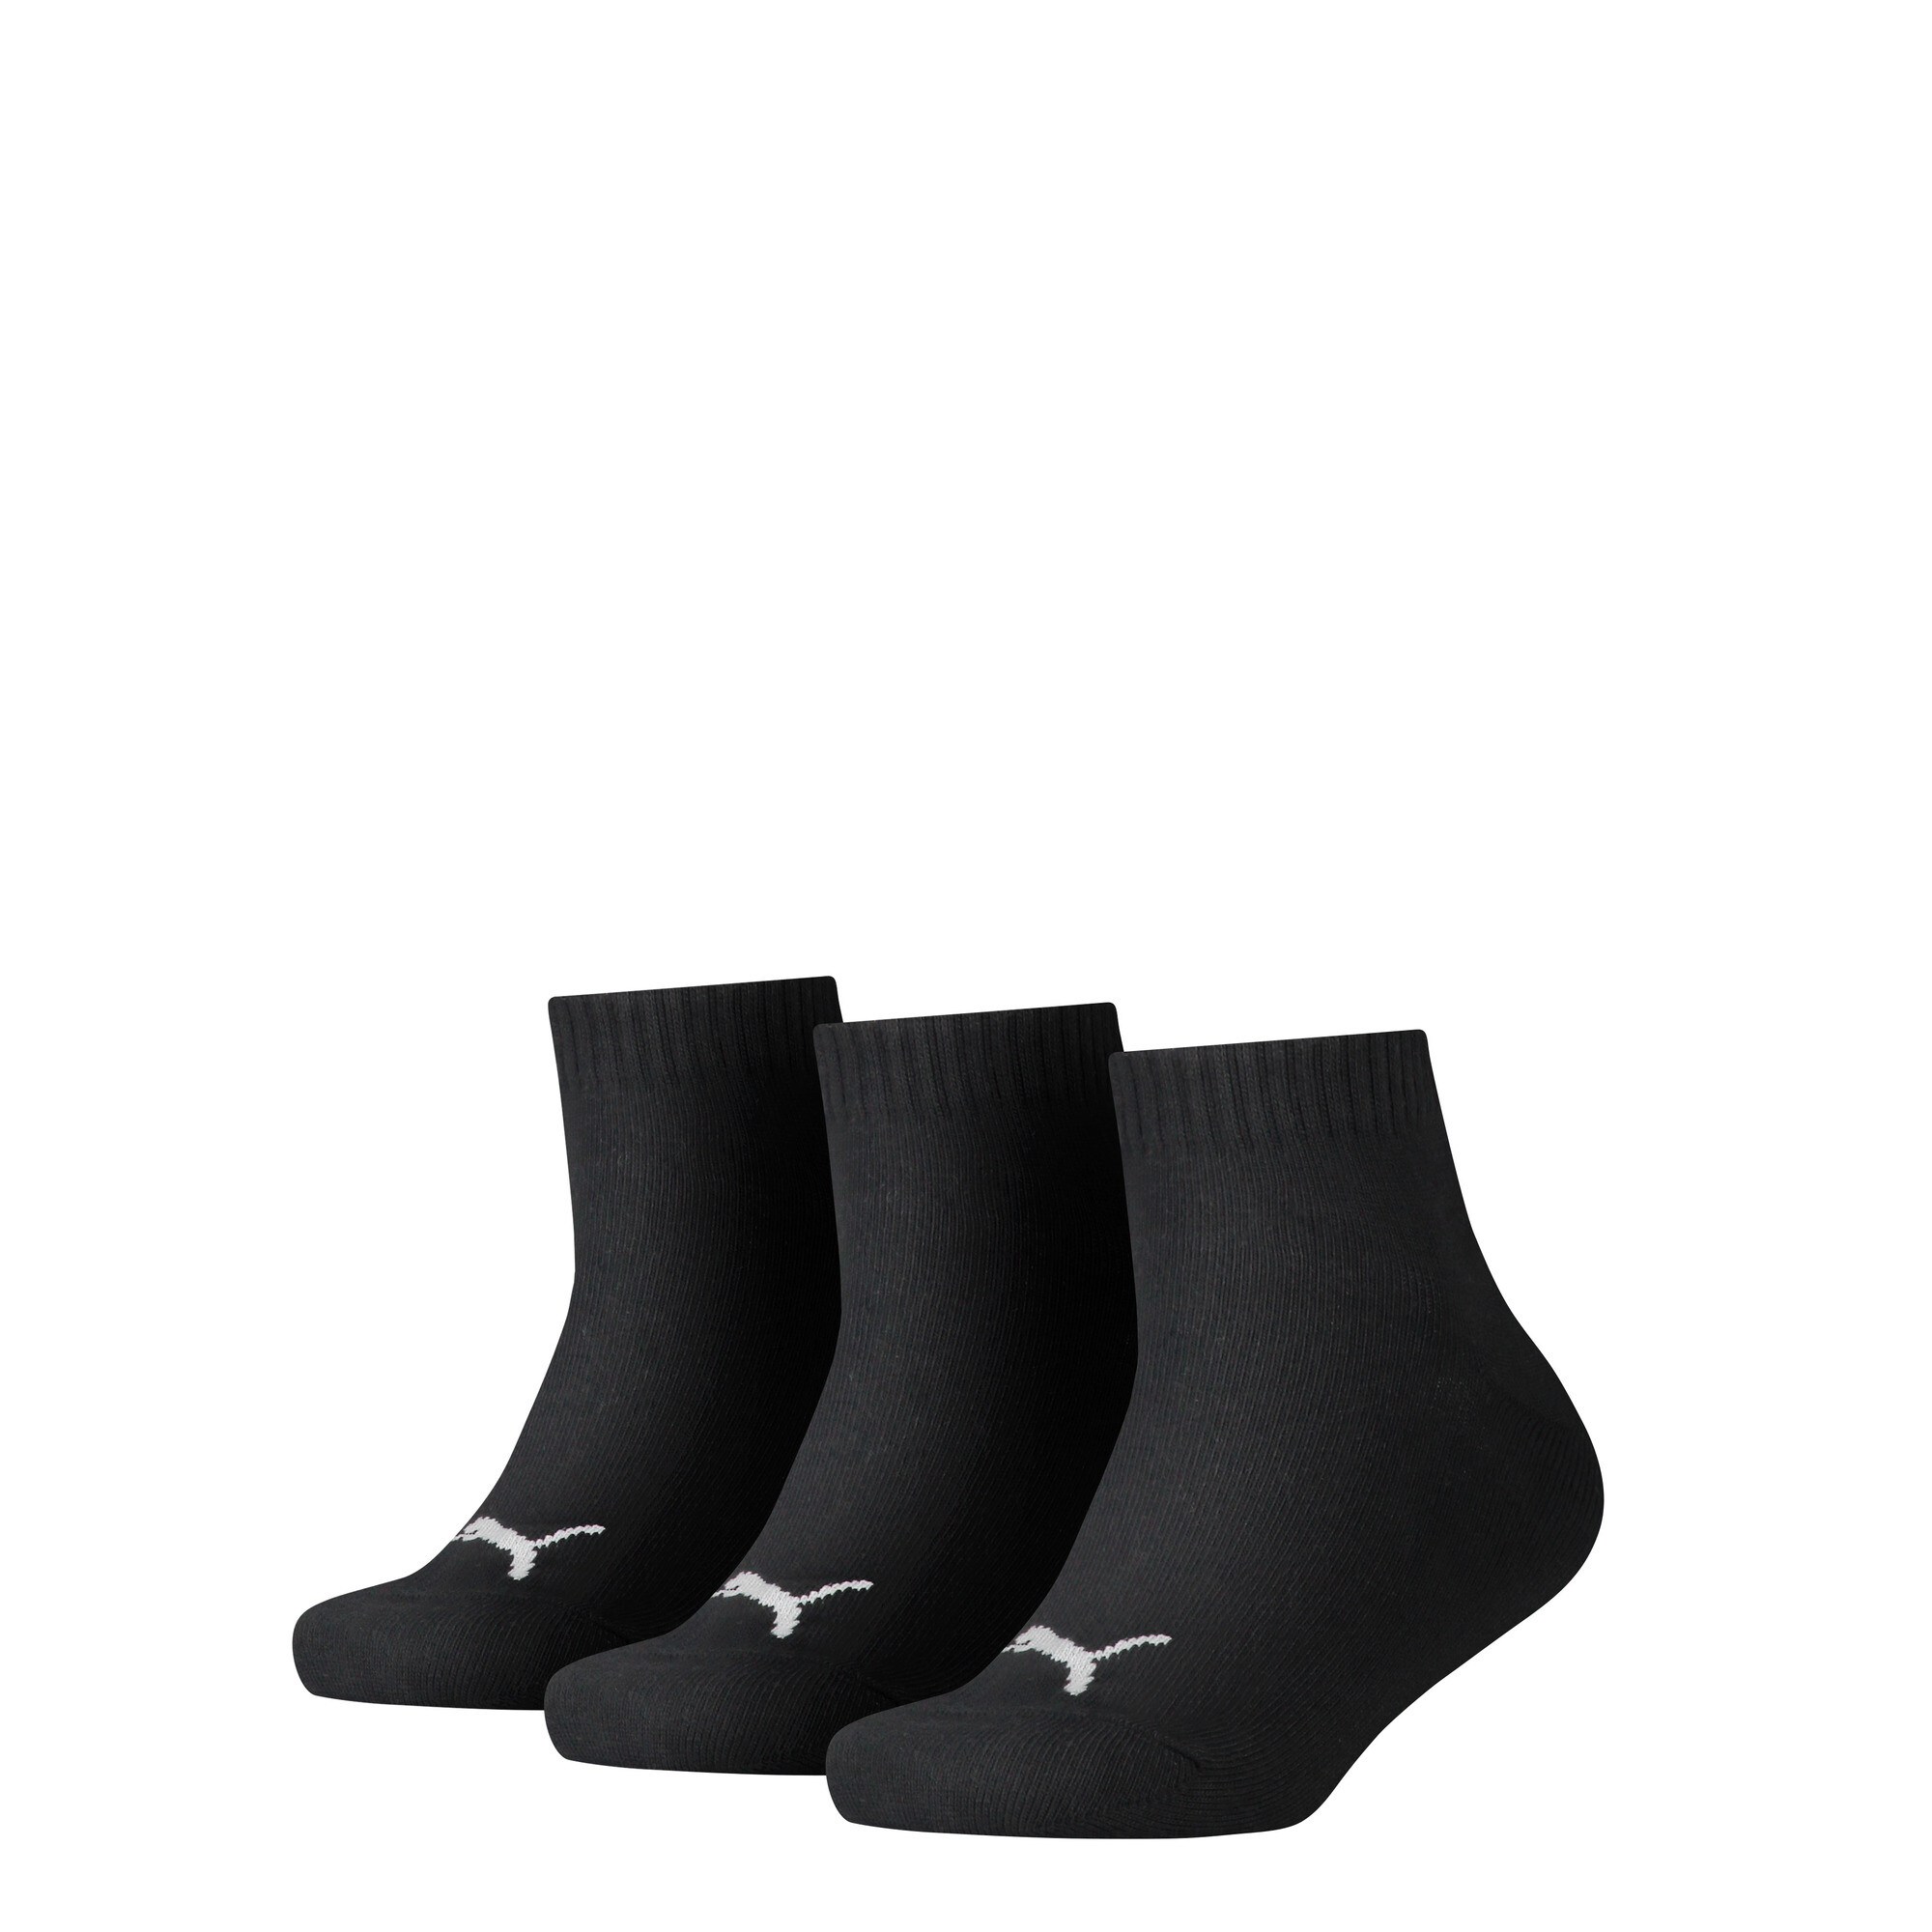 Kids' PUMA Quarter Socks 3 Pack In Black, Size 31-34